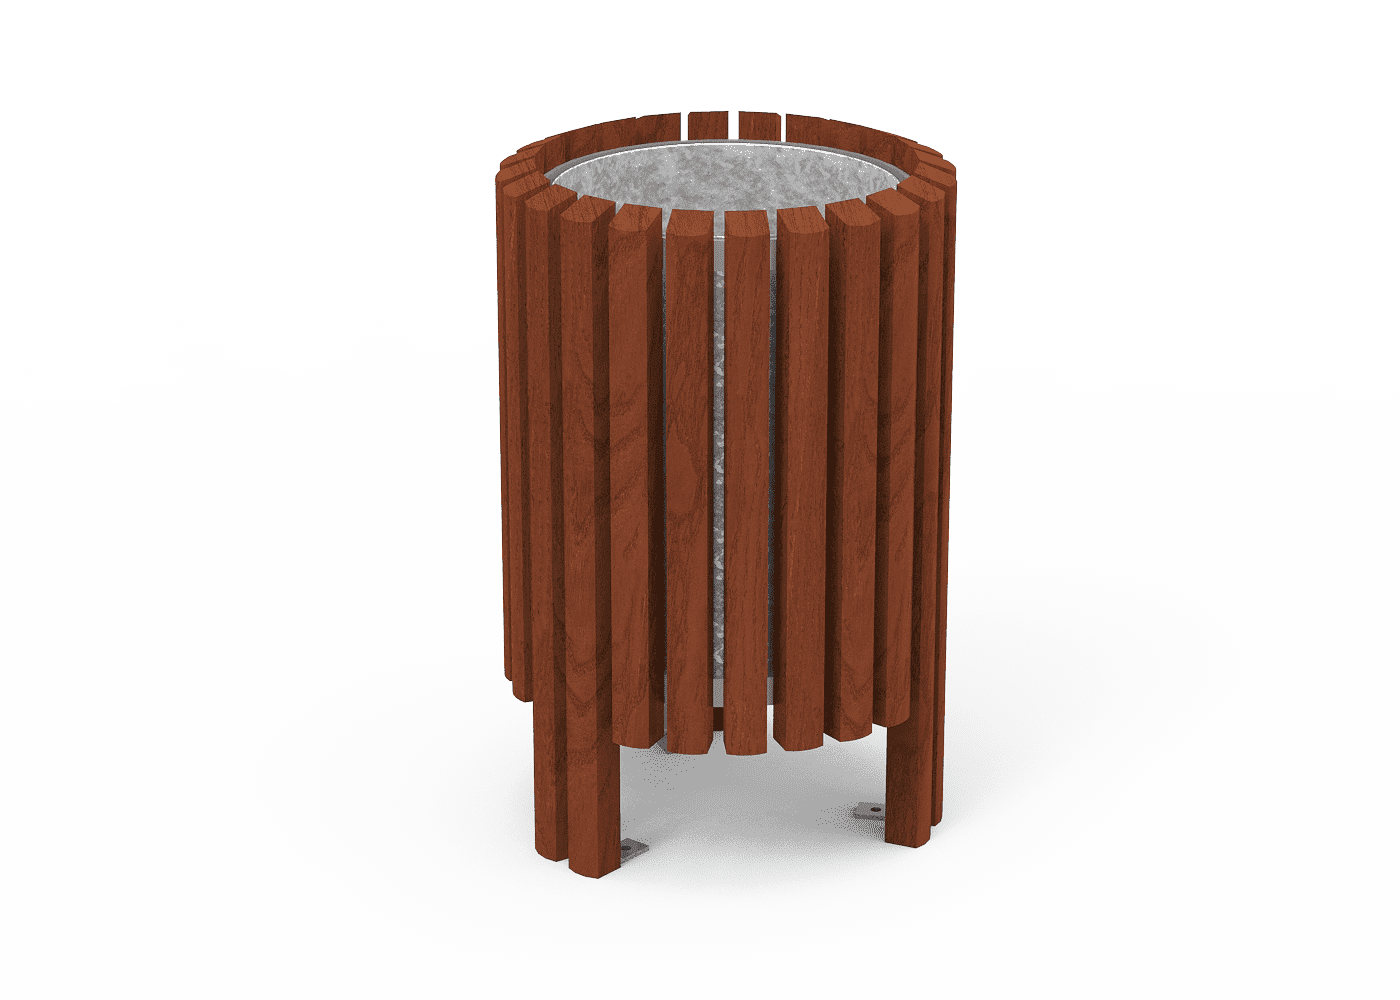  CffdoiLJT - Papelera de madera (tamaño grande), diseño